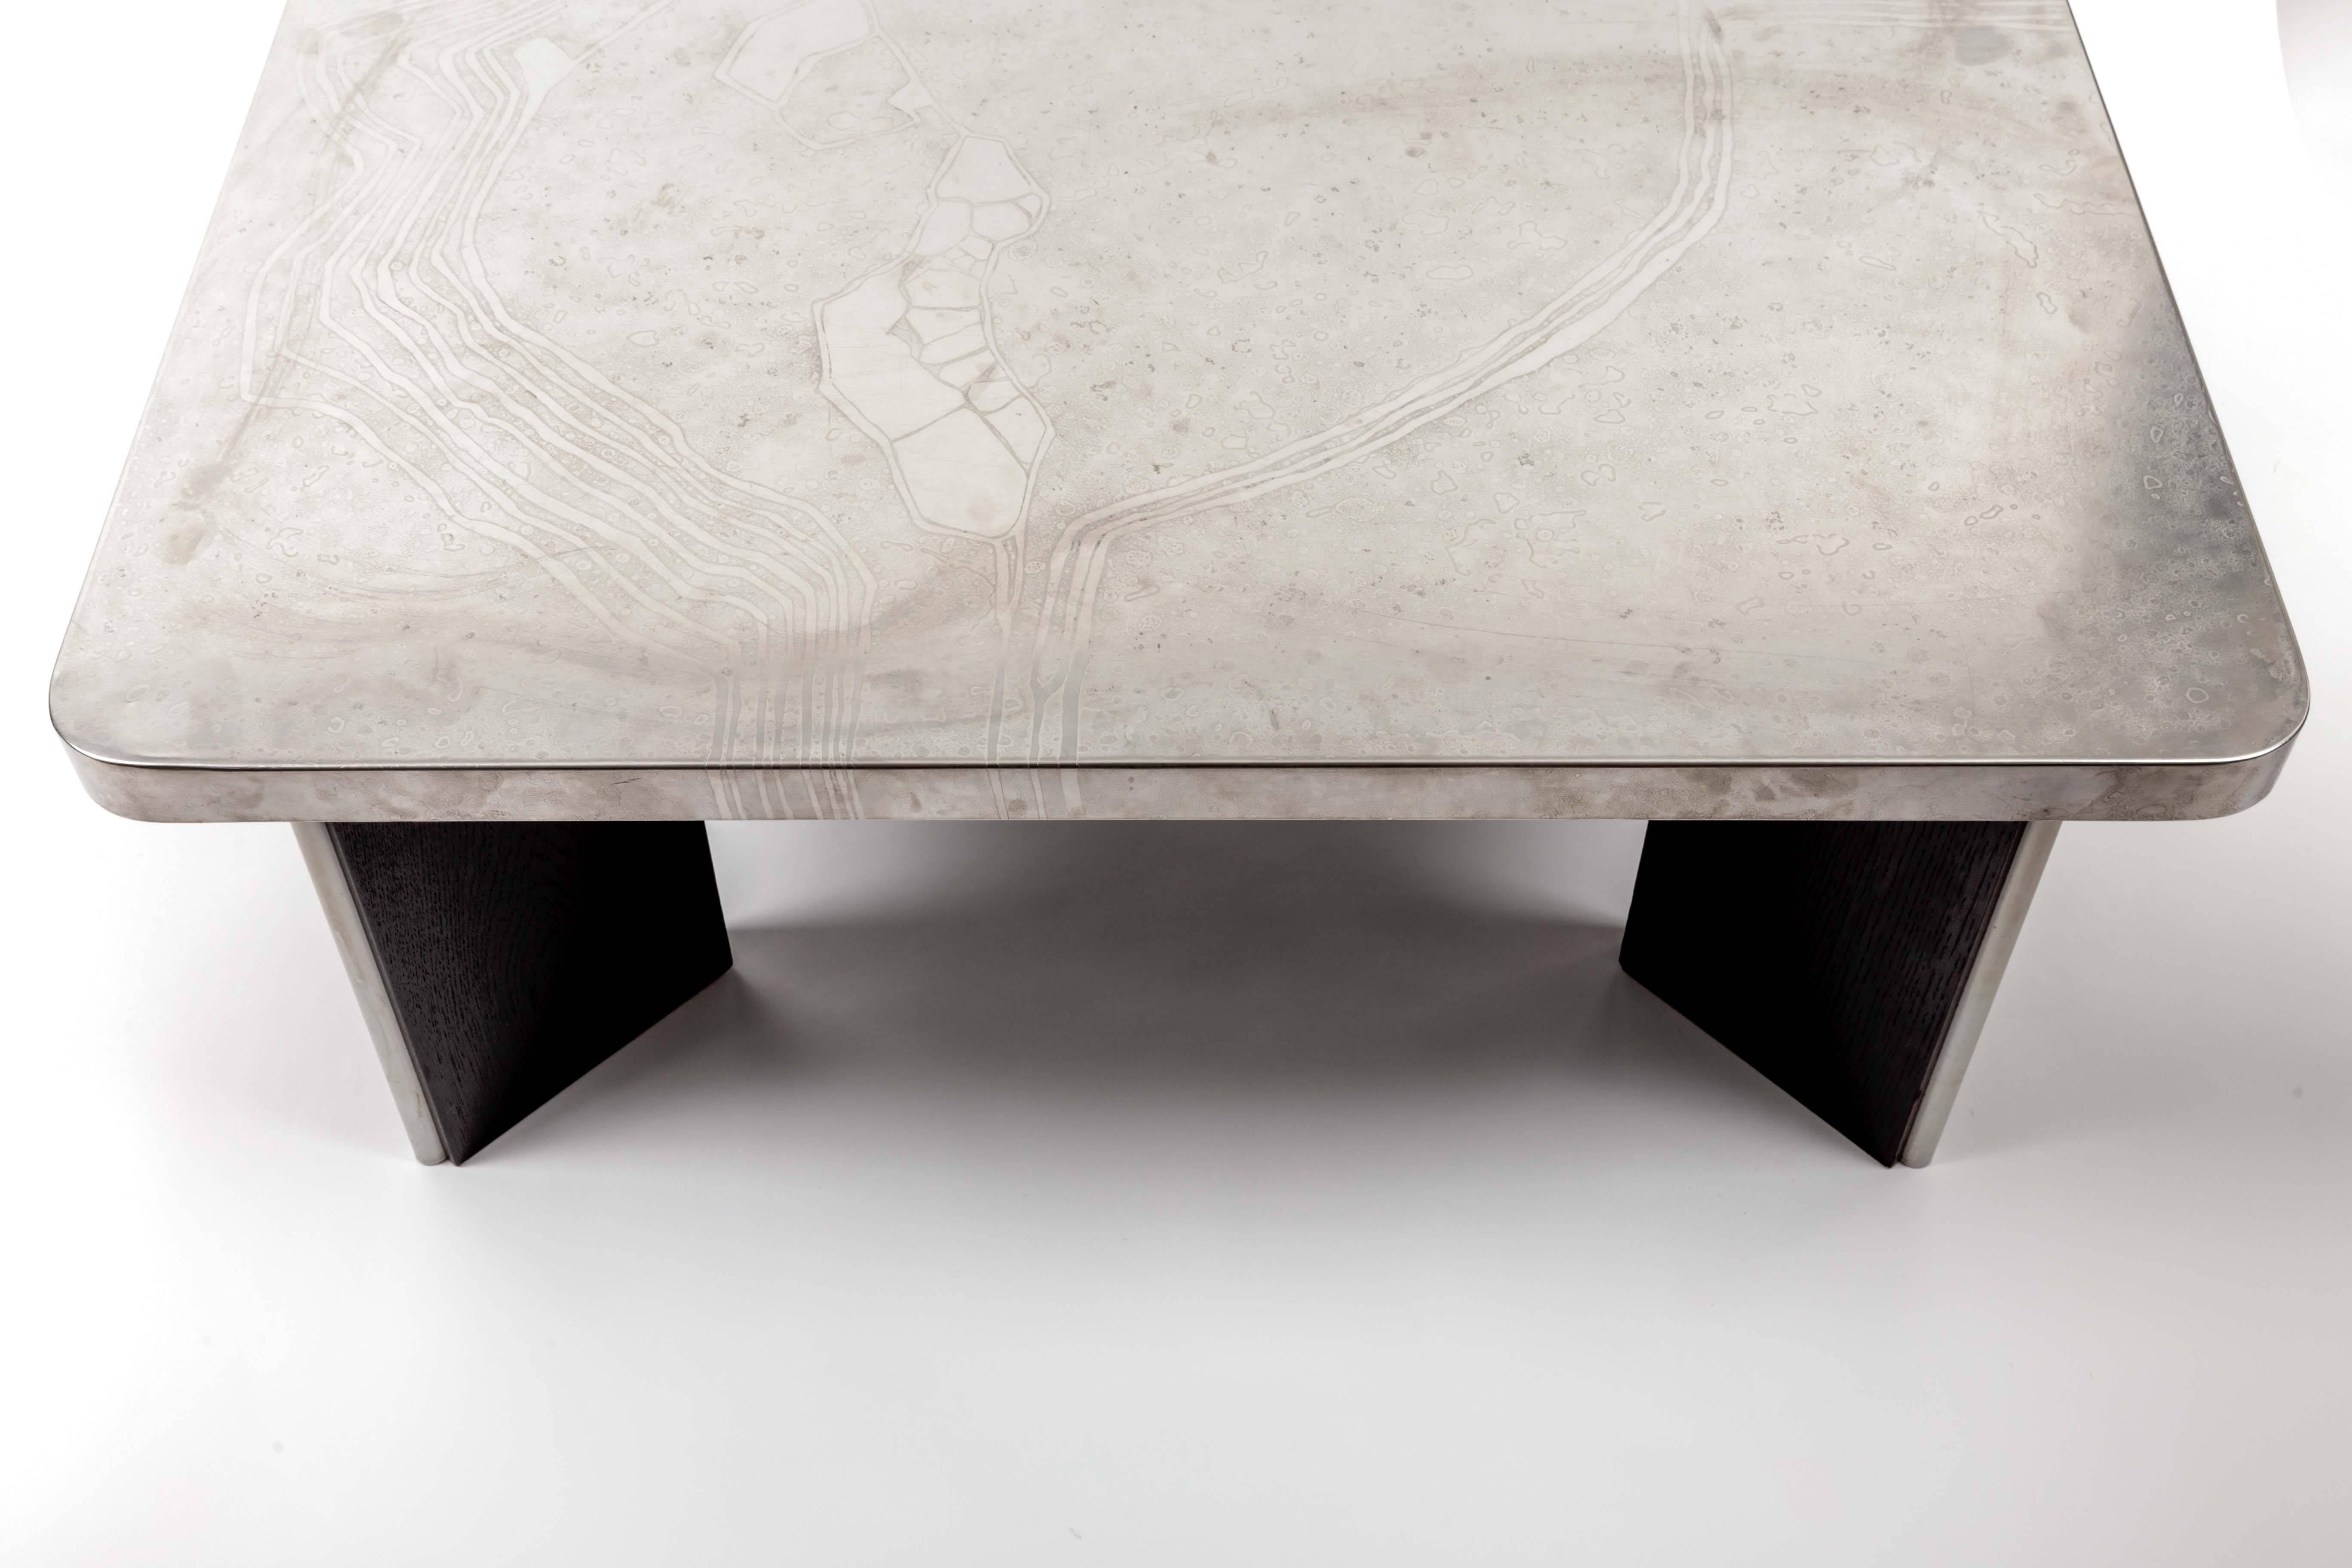 Modernist Aluminum Cocktail Table with Etched Design, on Black Wooden Base 1